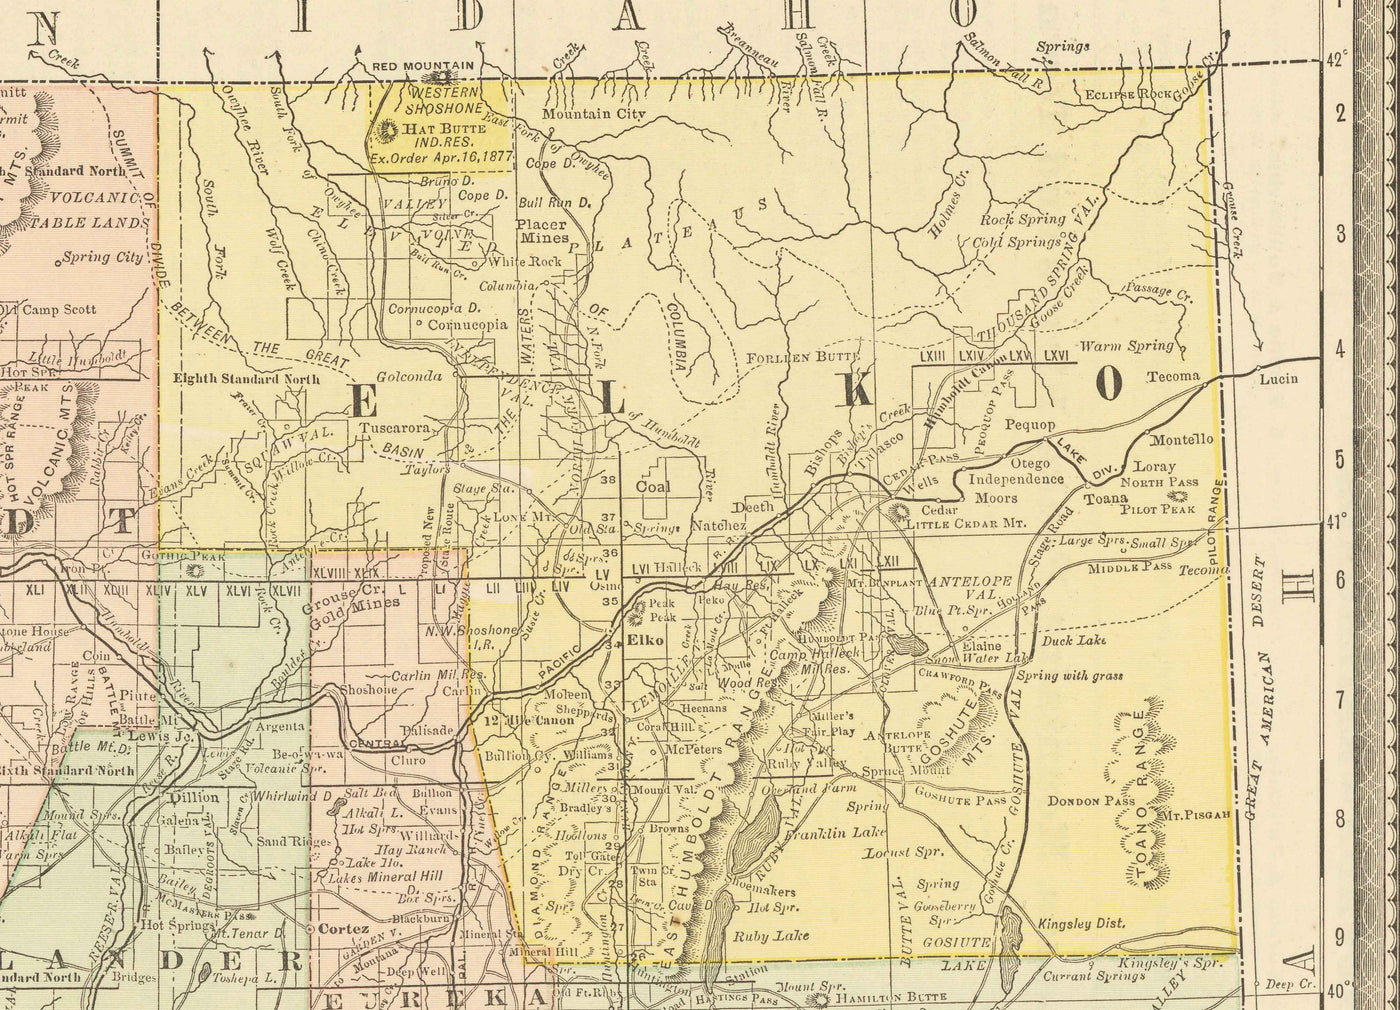 Alte Karte von Nevada, USA, 1882 von Rand & McNally - Las Vegas, Reno, Bezirke, Carson City